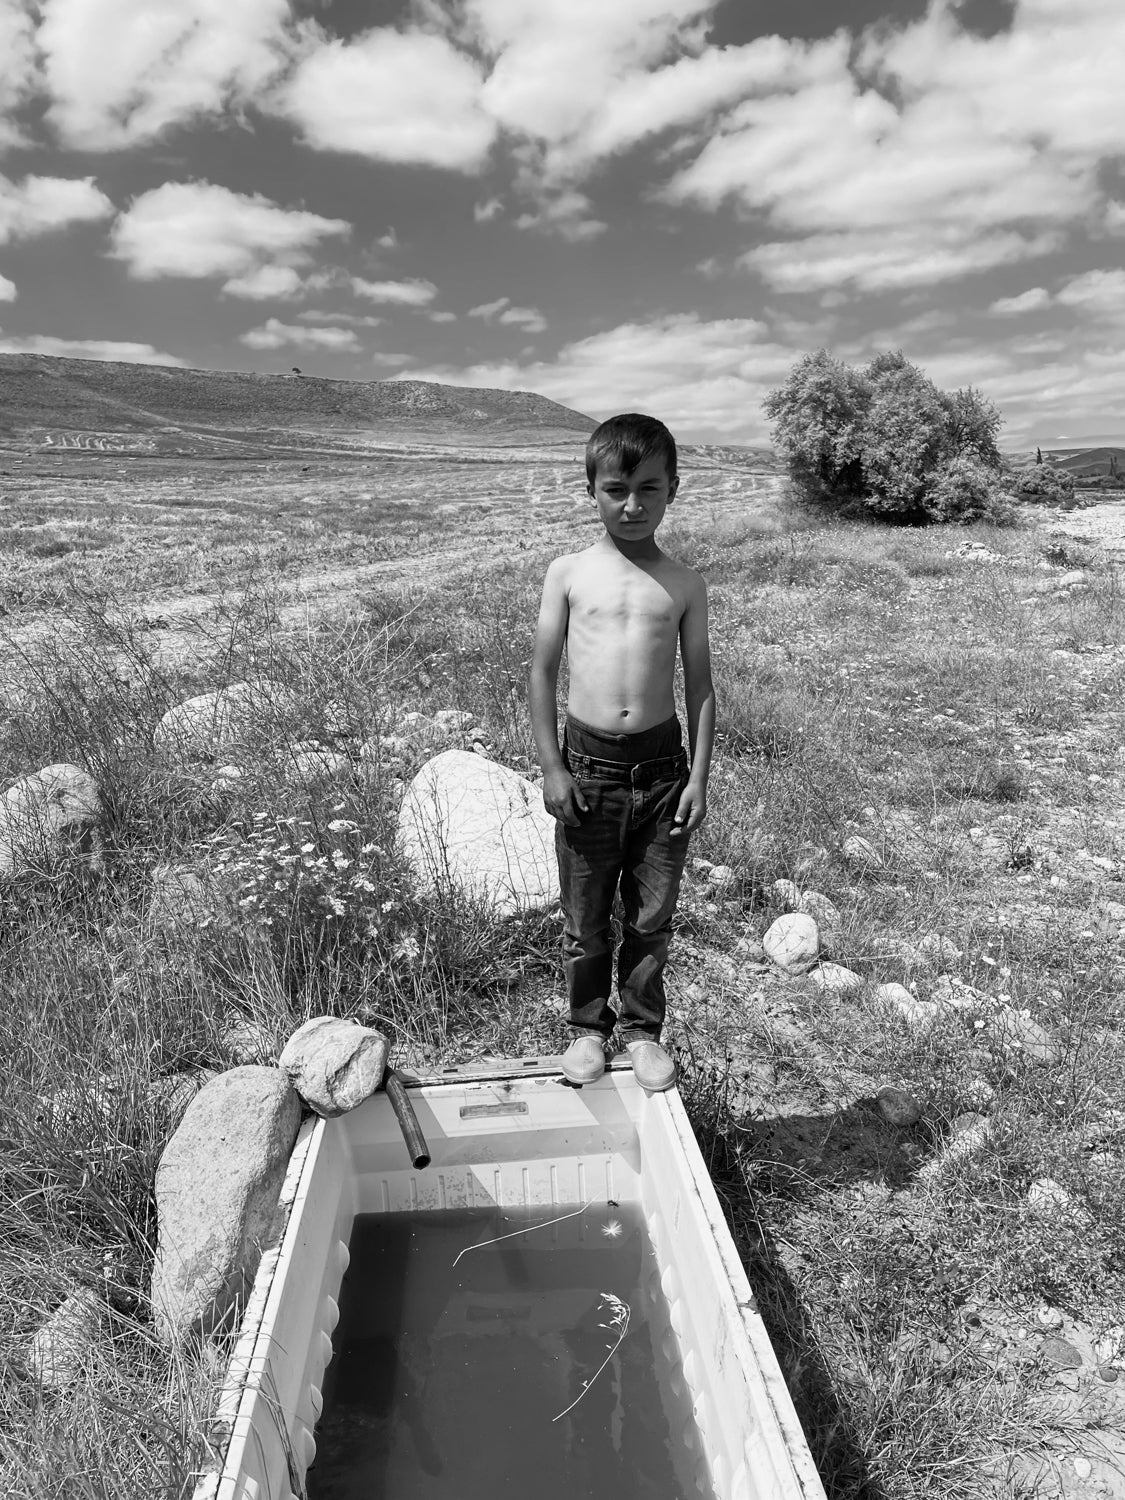 Ramazan Cirakoglu from Türkiye, 1st Place – Portrait, Shot on iPhone 12